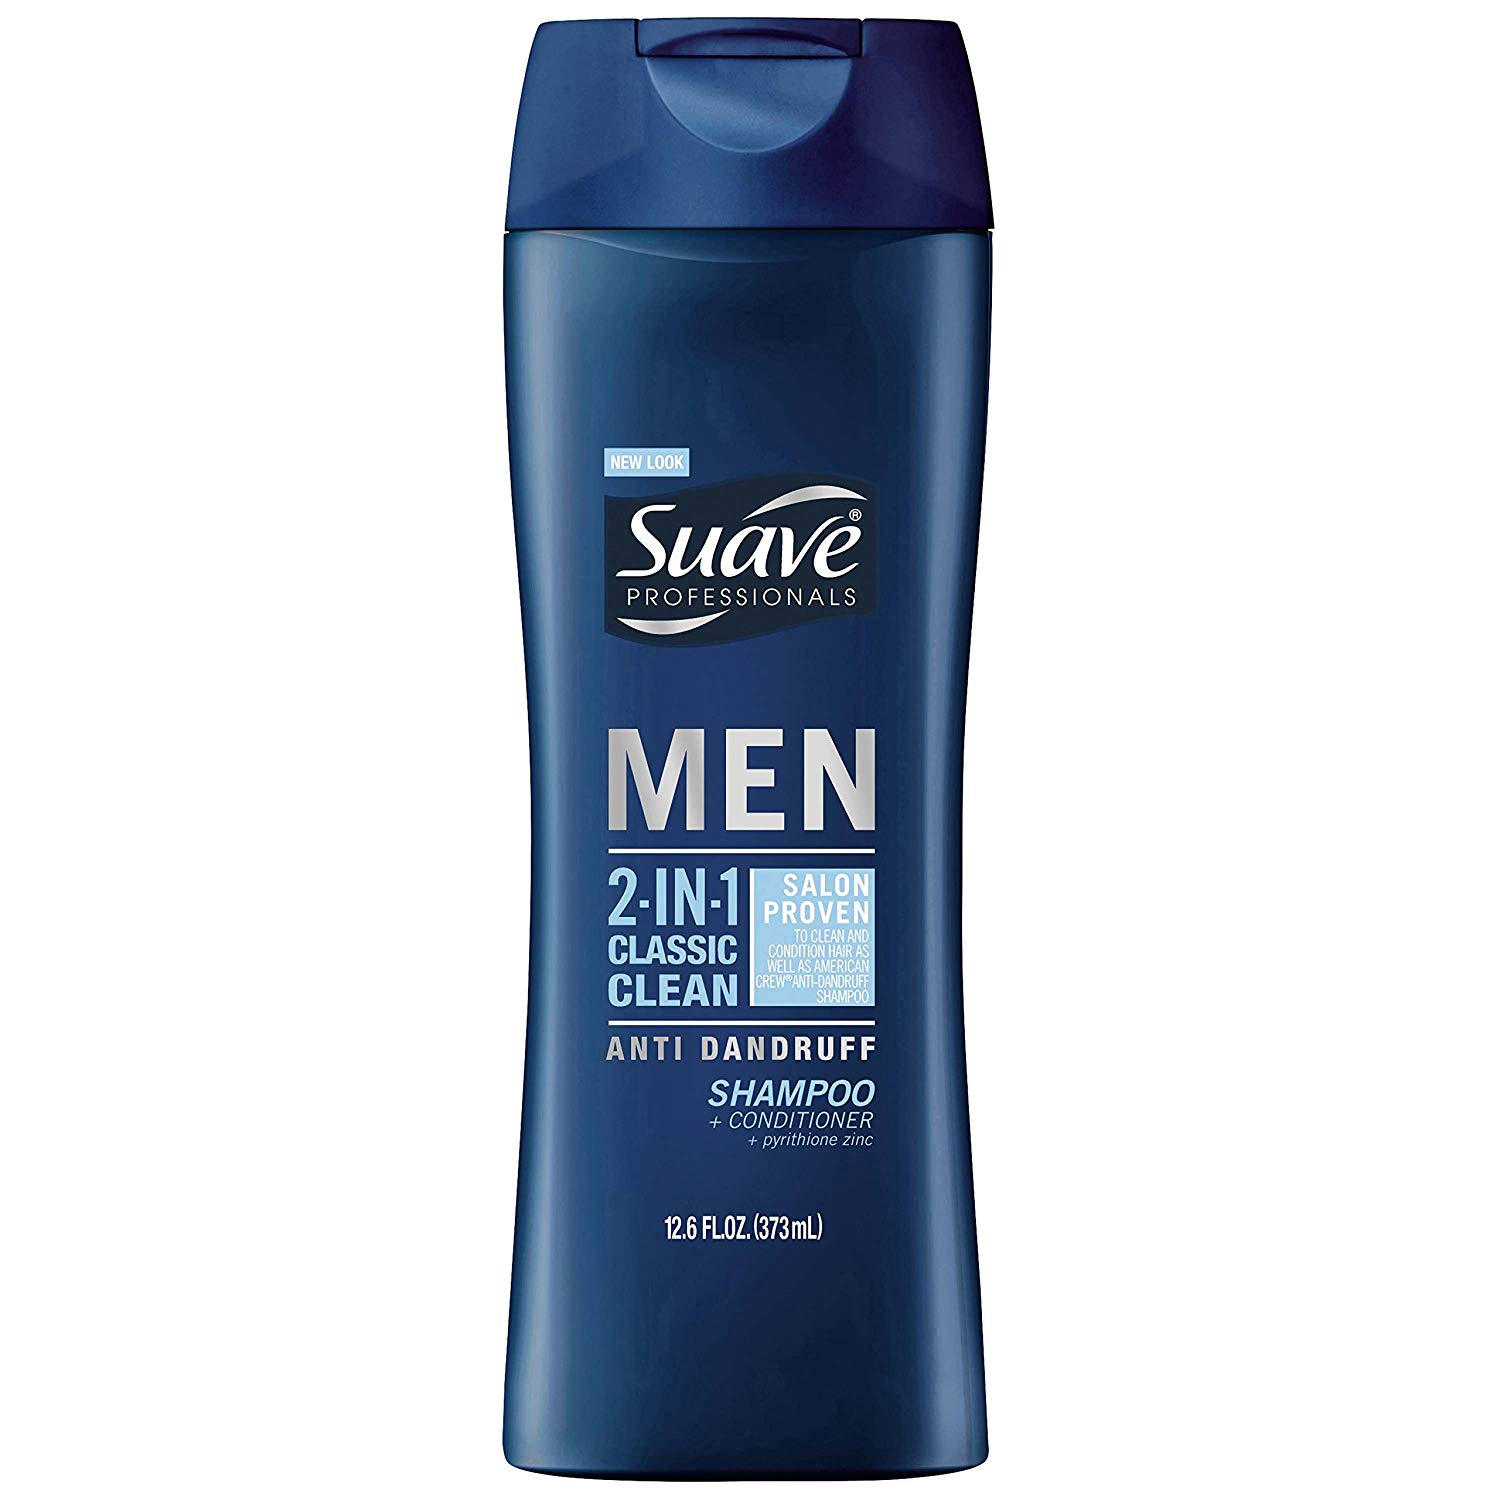 Suave Professionals Anti Dandruff Shampoo Reviews